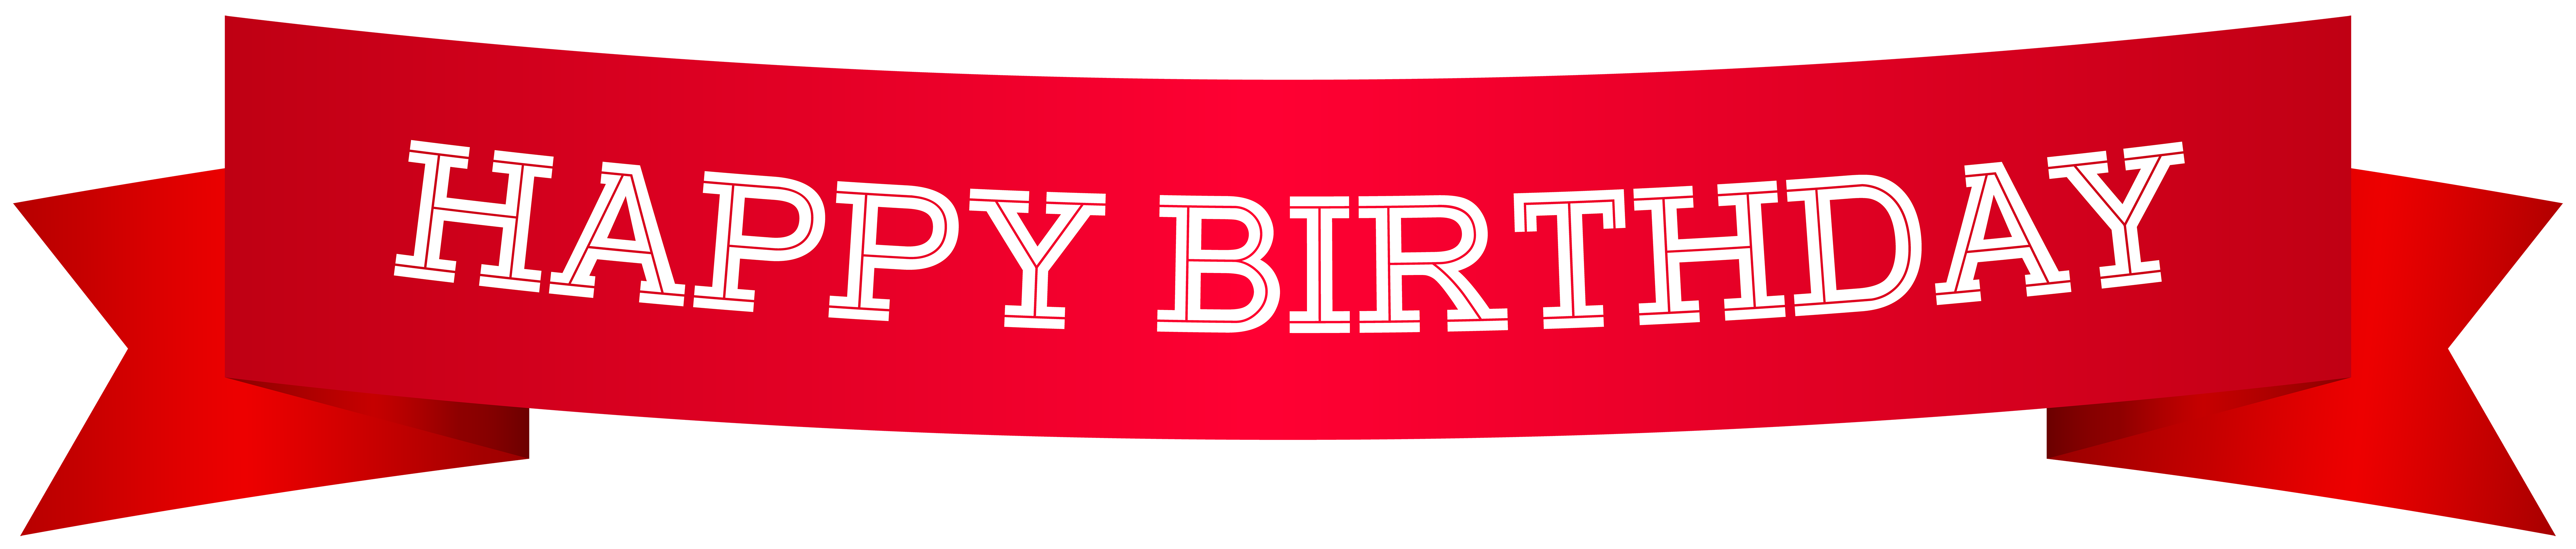 Banner Birthday Clip art - Happy Birthday Banner Red PNG Clip Art Image